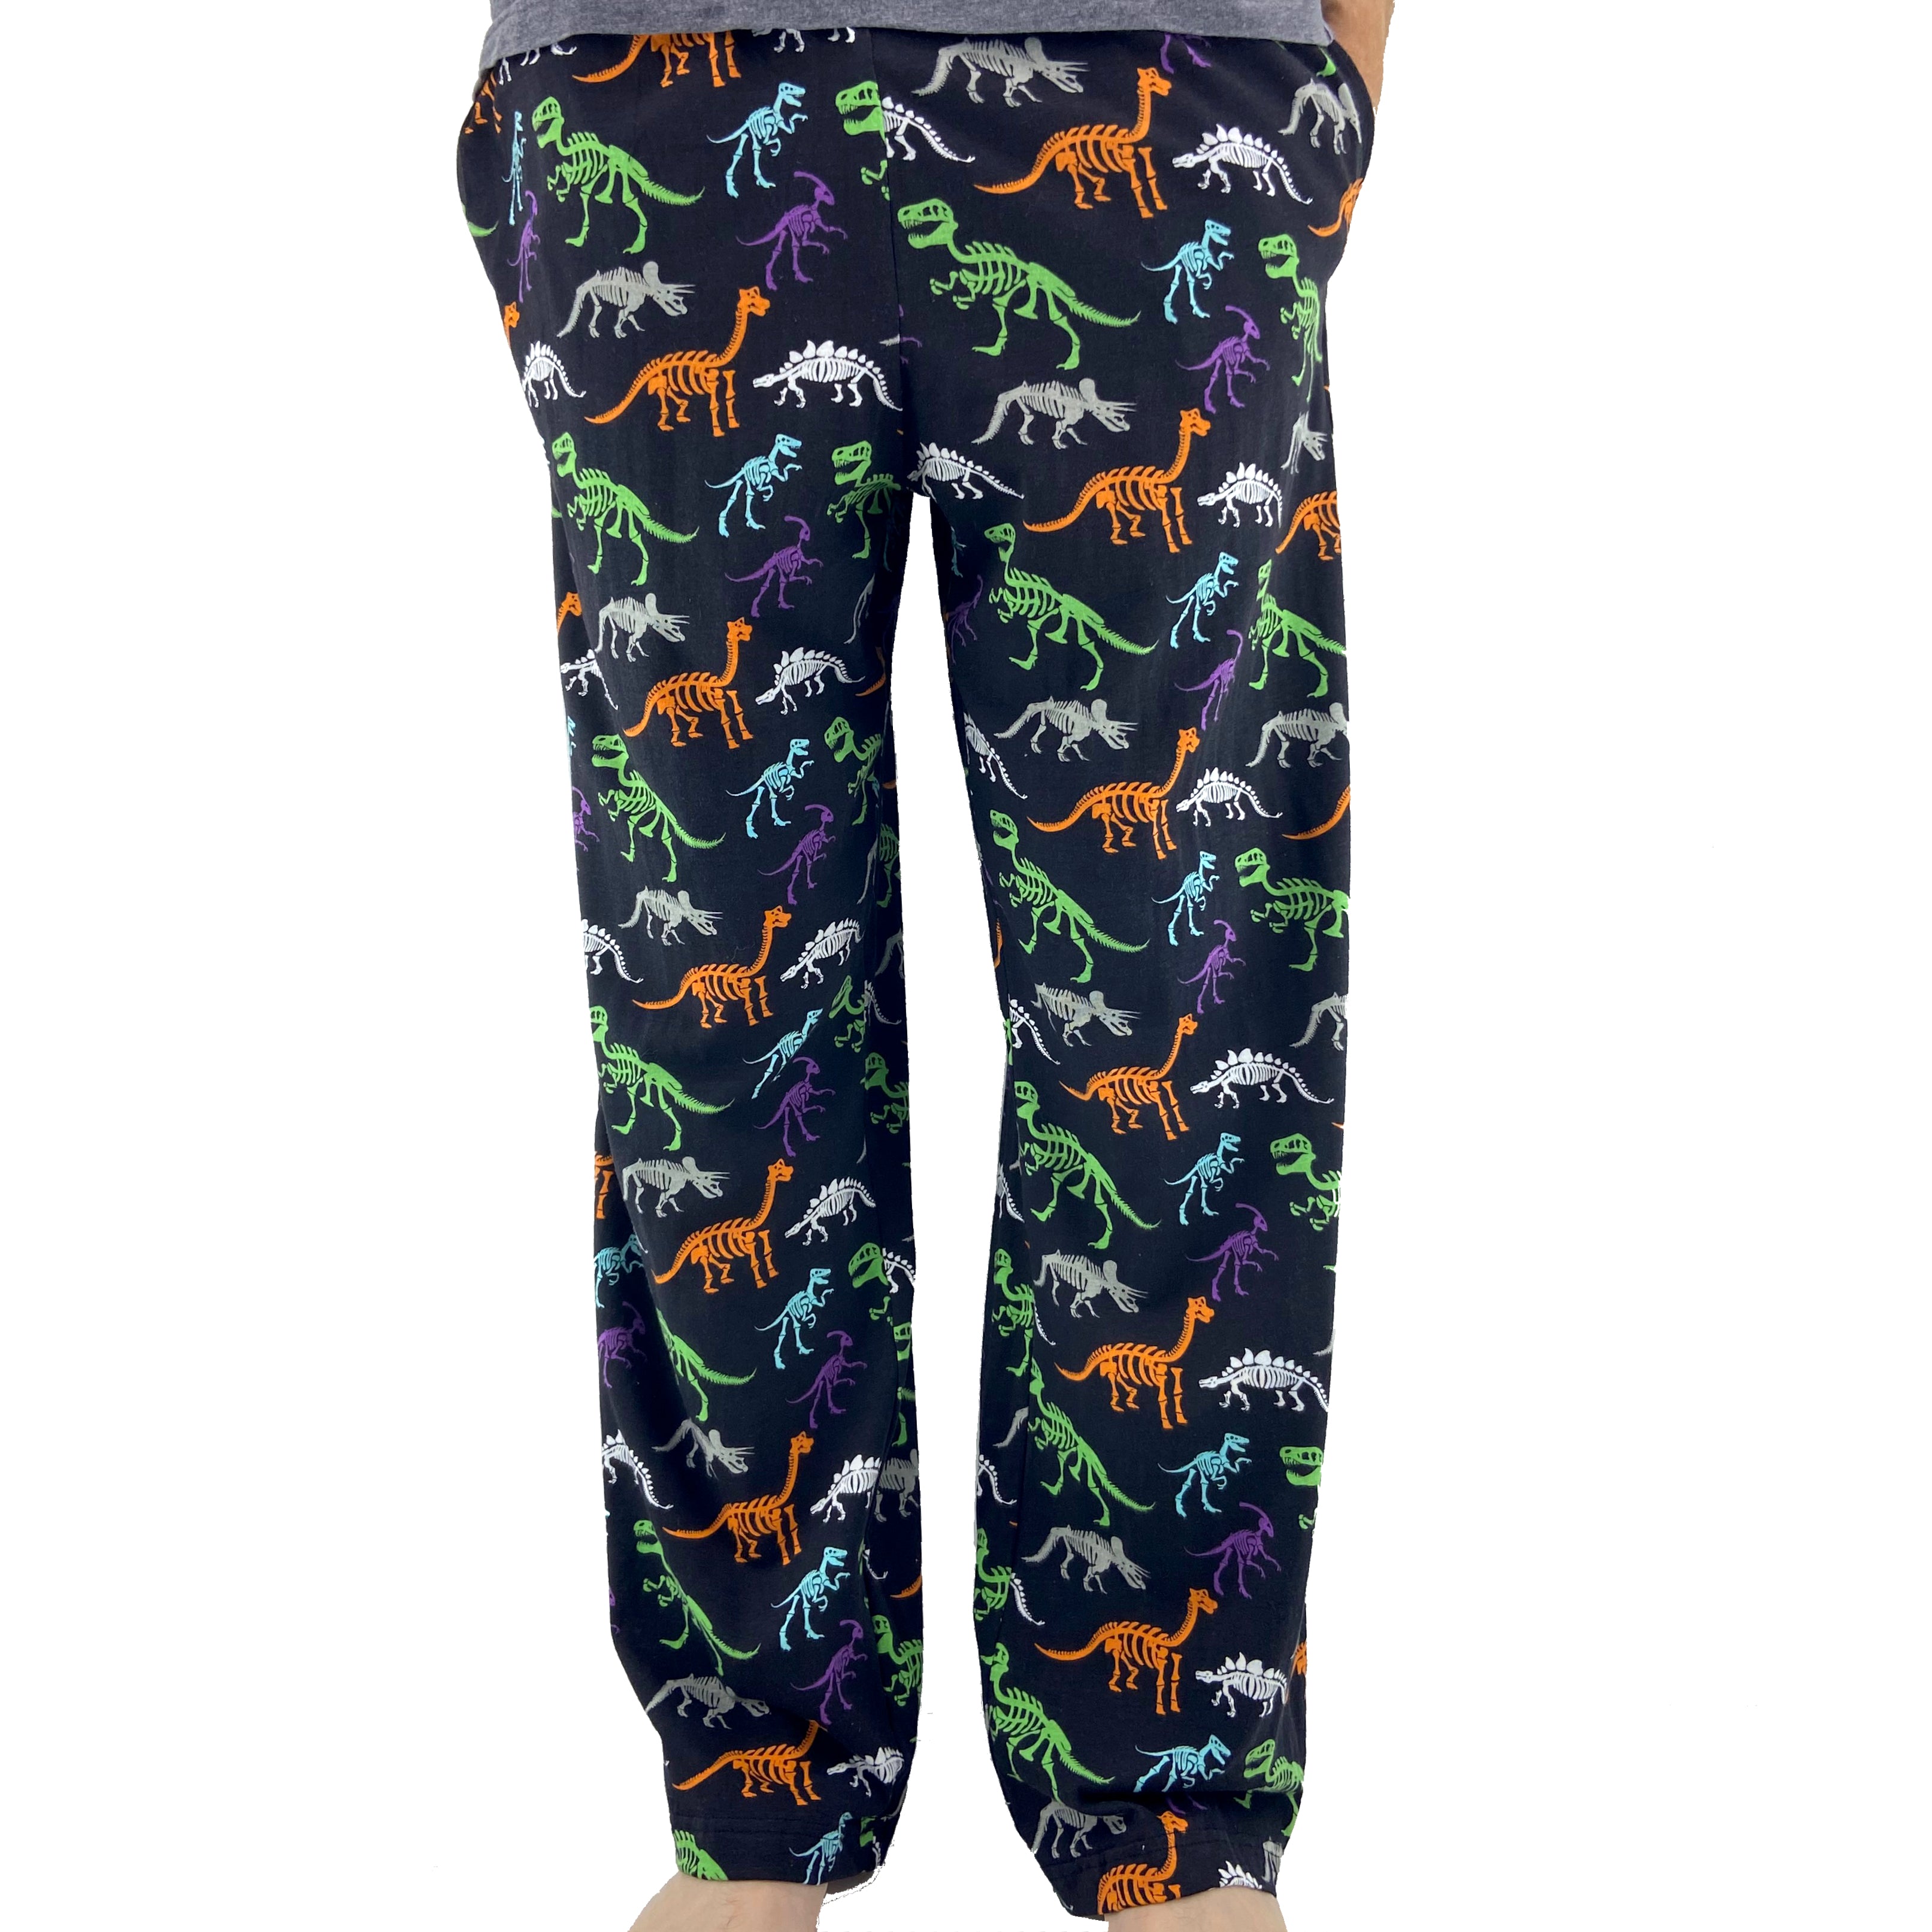 Men's Knit Pajama Pants